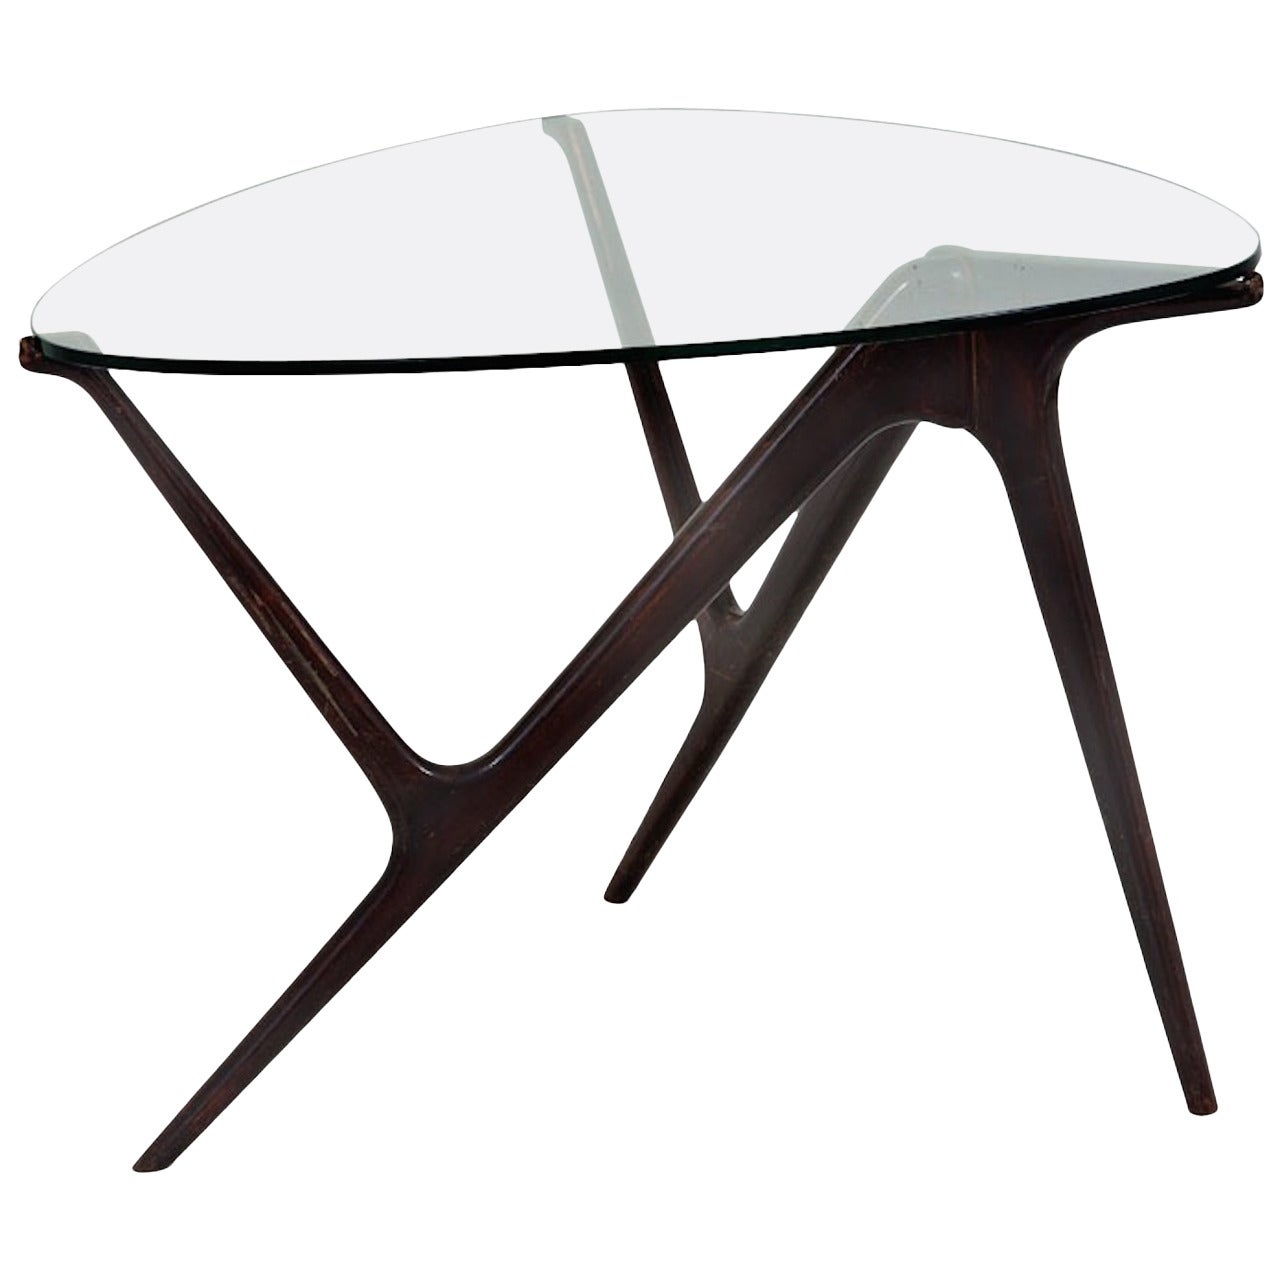 1950s Italian Occasional Table in the Style of Carlo Mollino